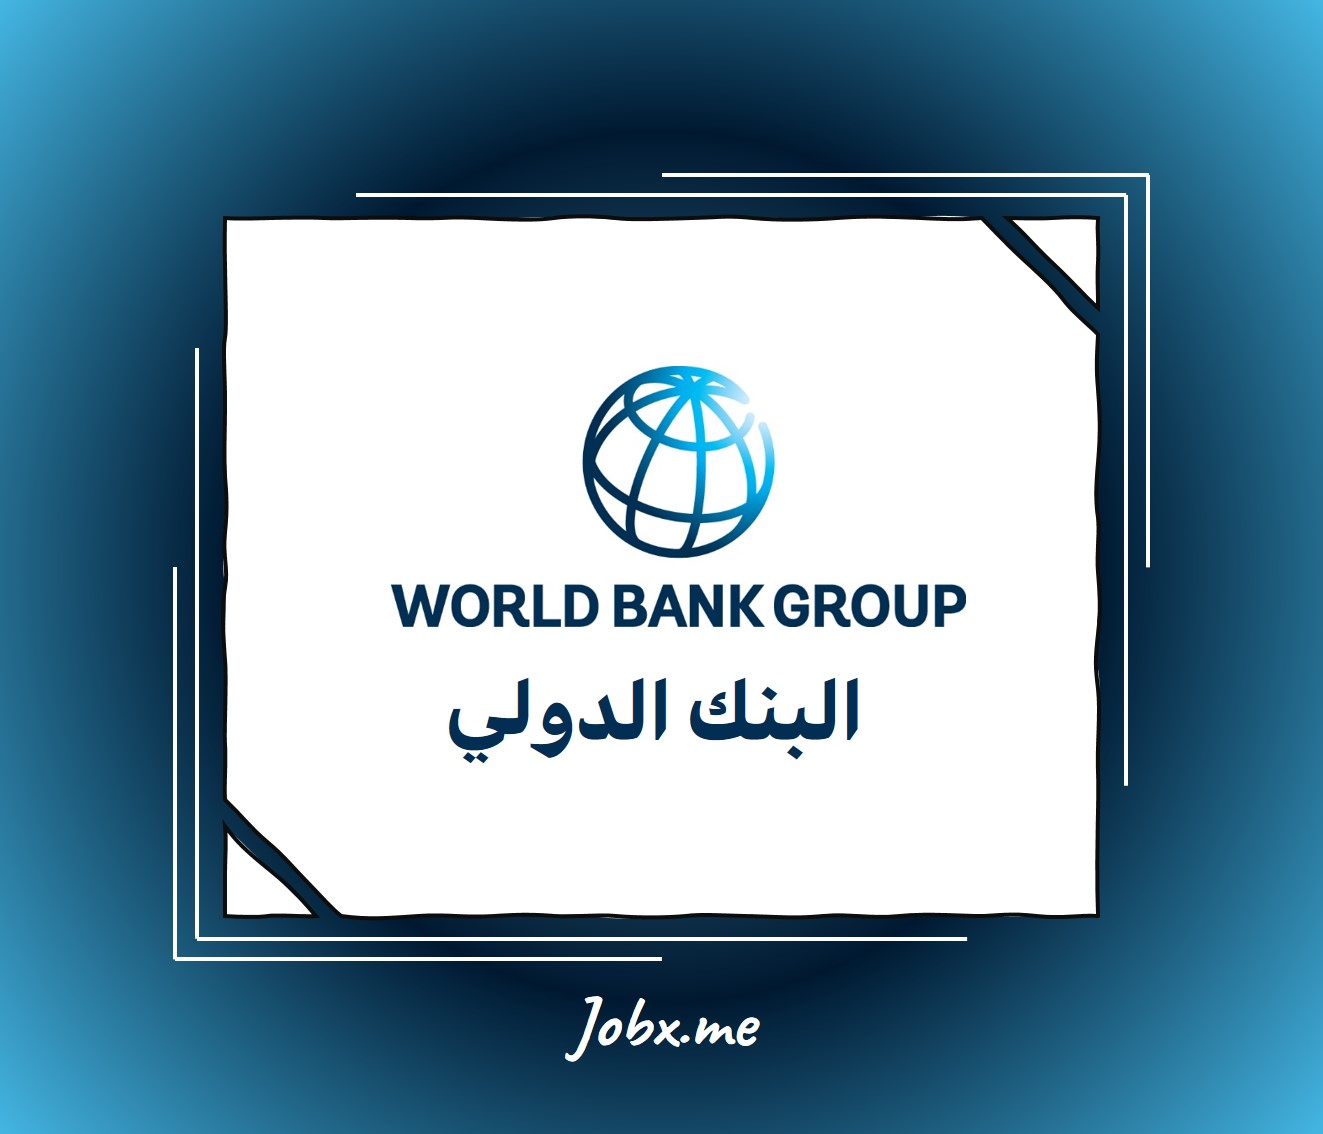 World Bank Careers